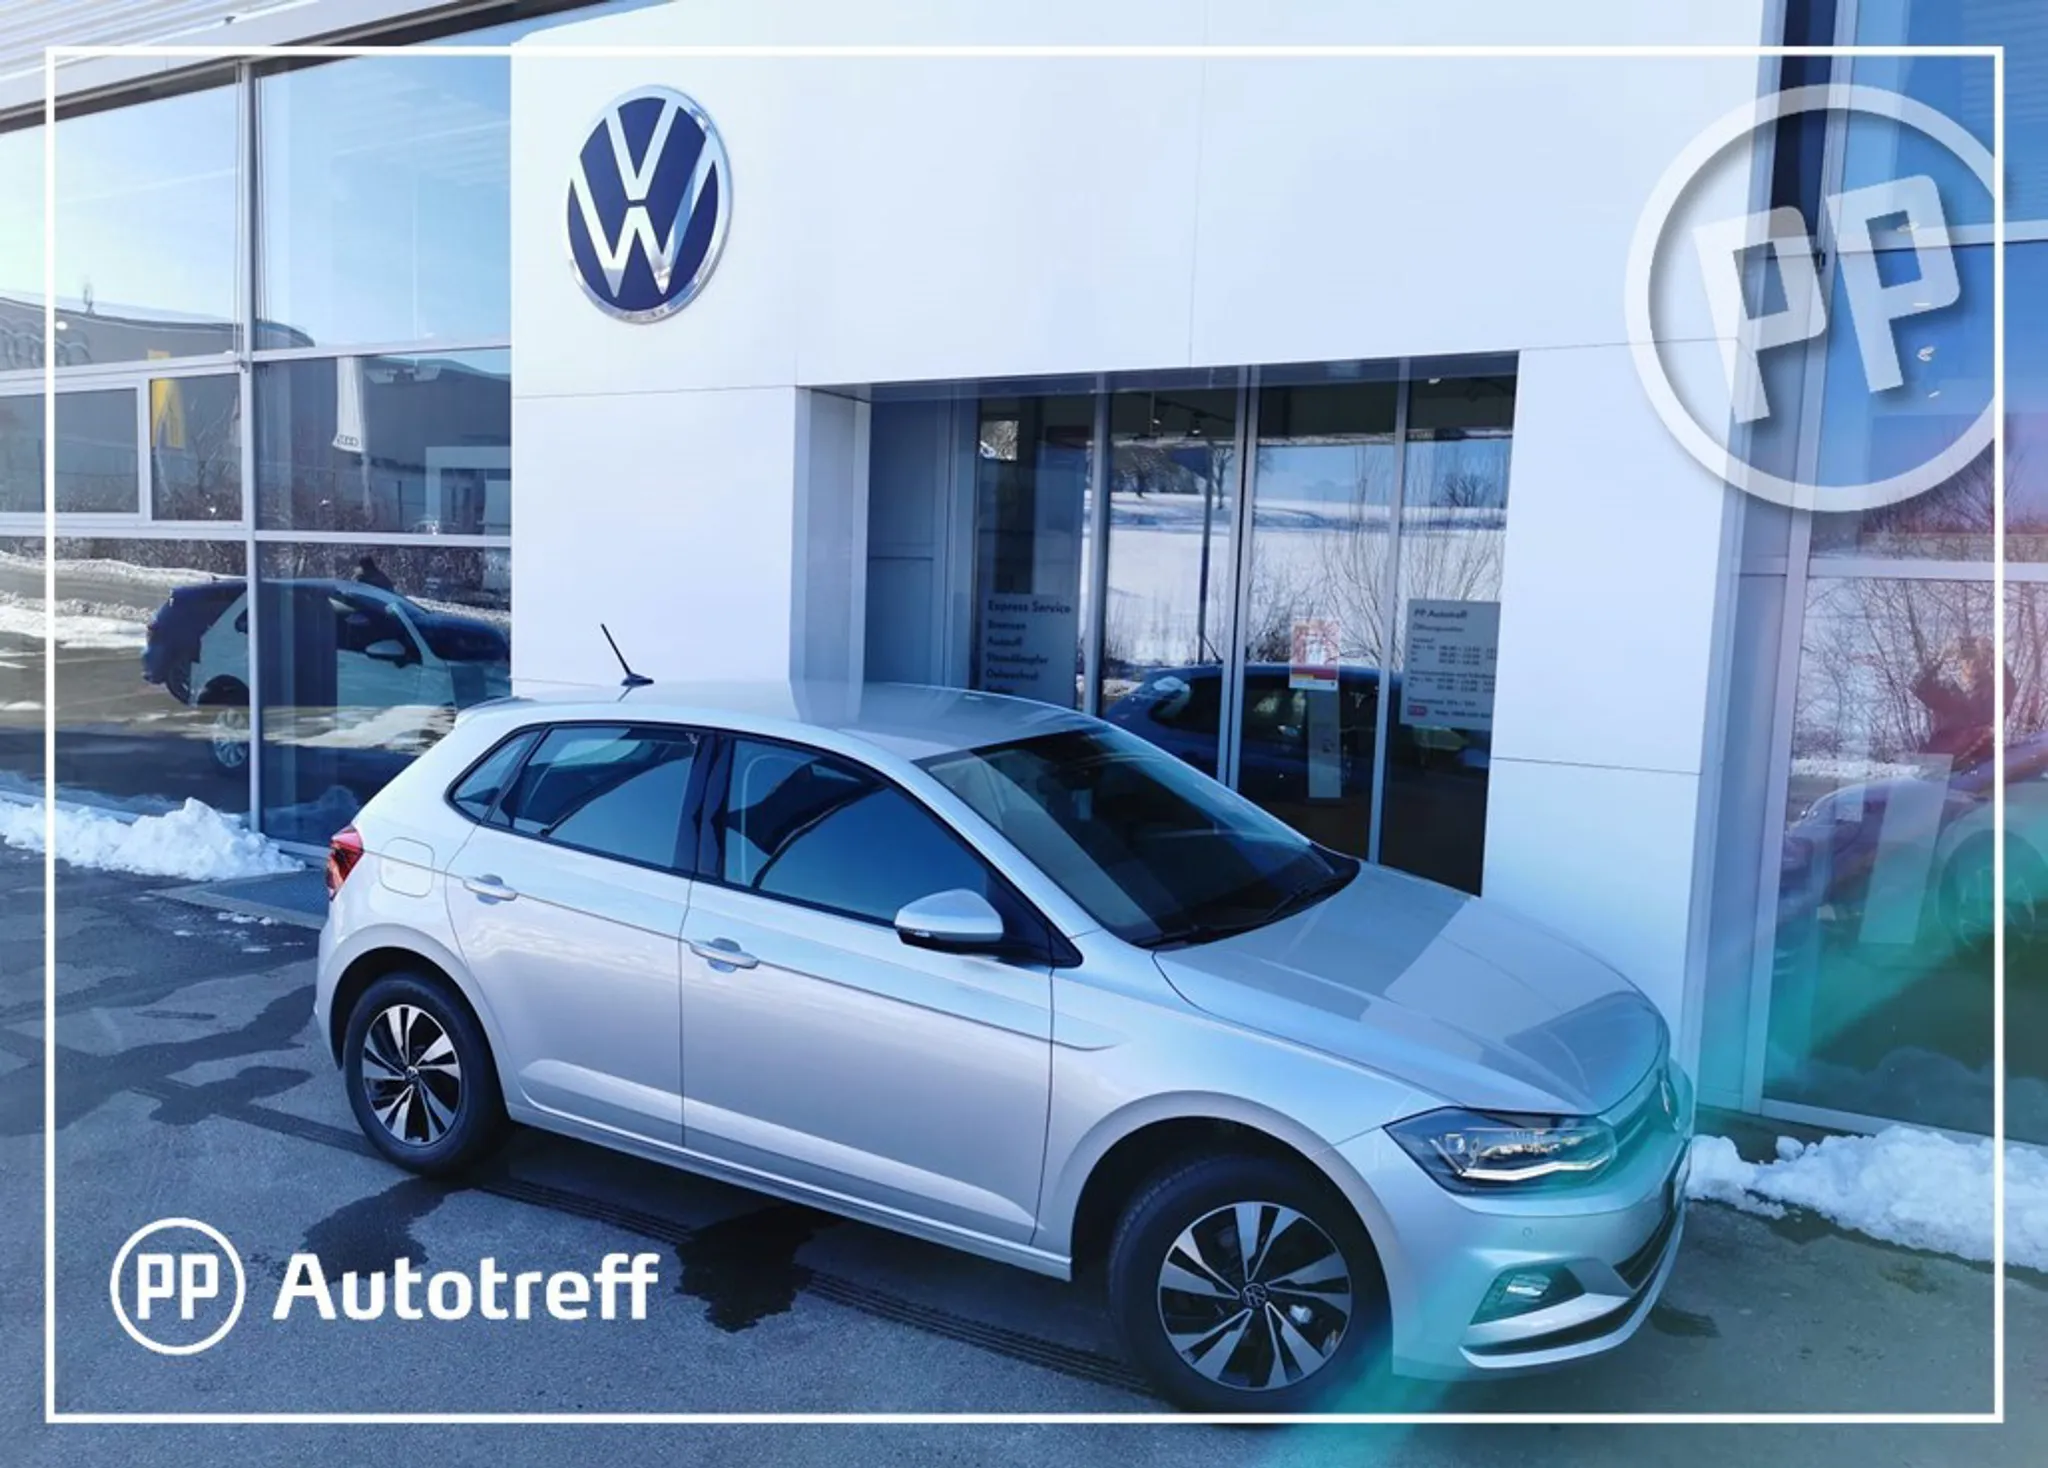 VW-Polo-car-image